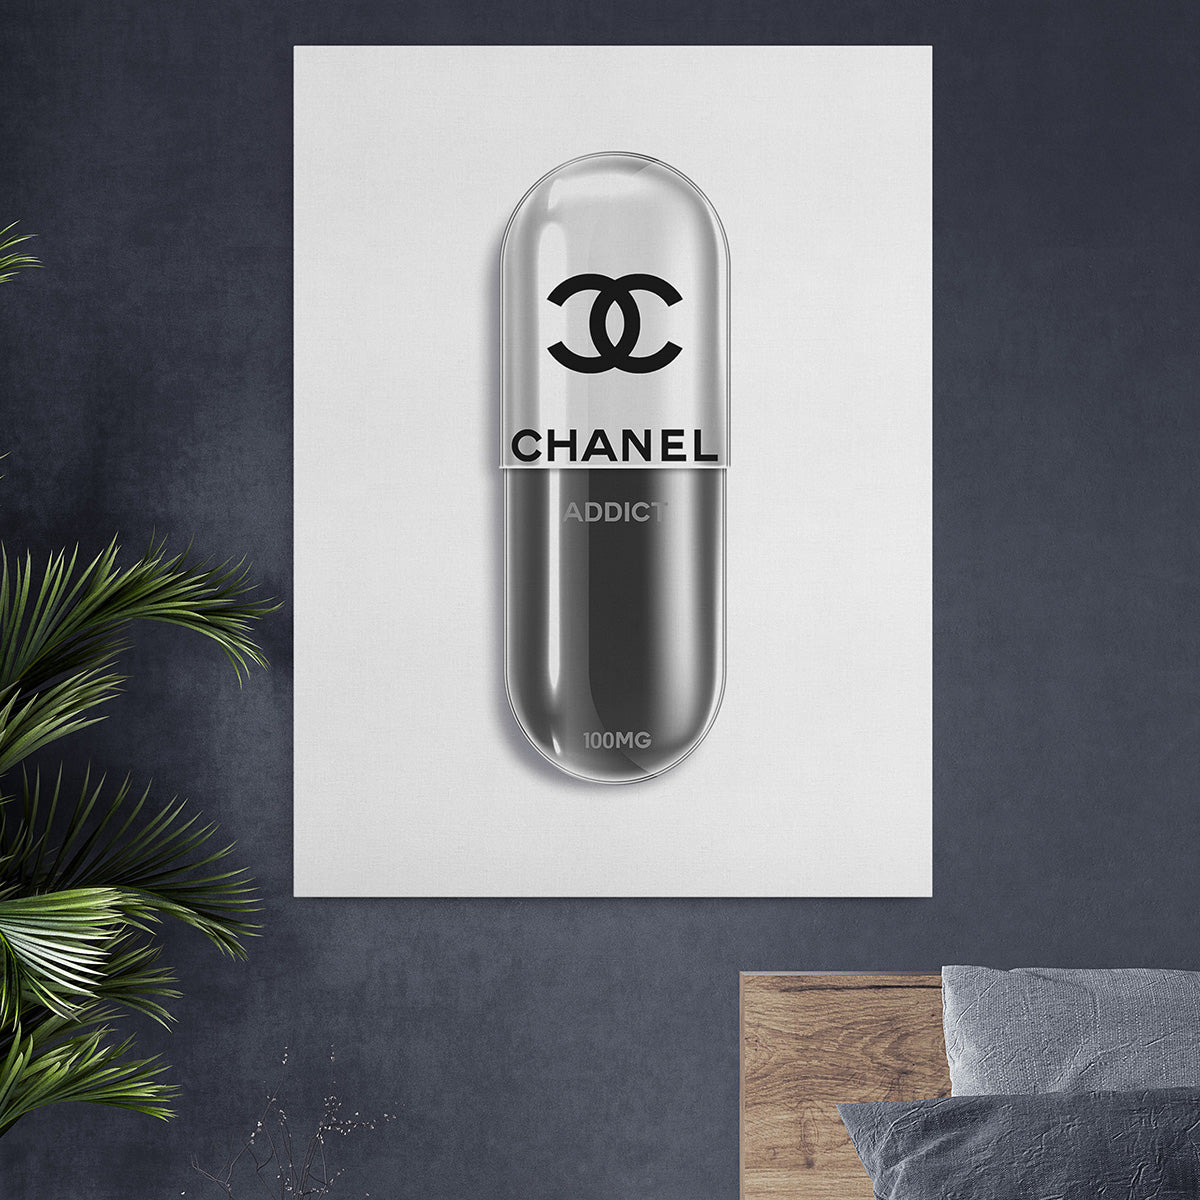 Chanel Canvas Art in Dubai. Delivery in 2-5 days – Portraits & Co